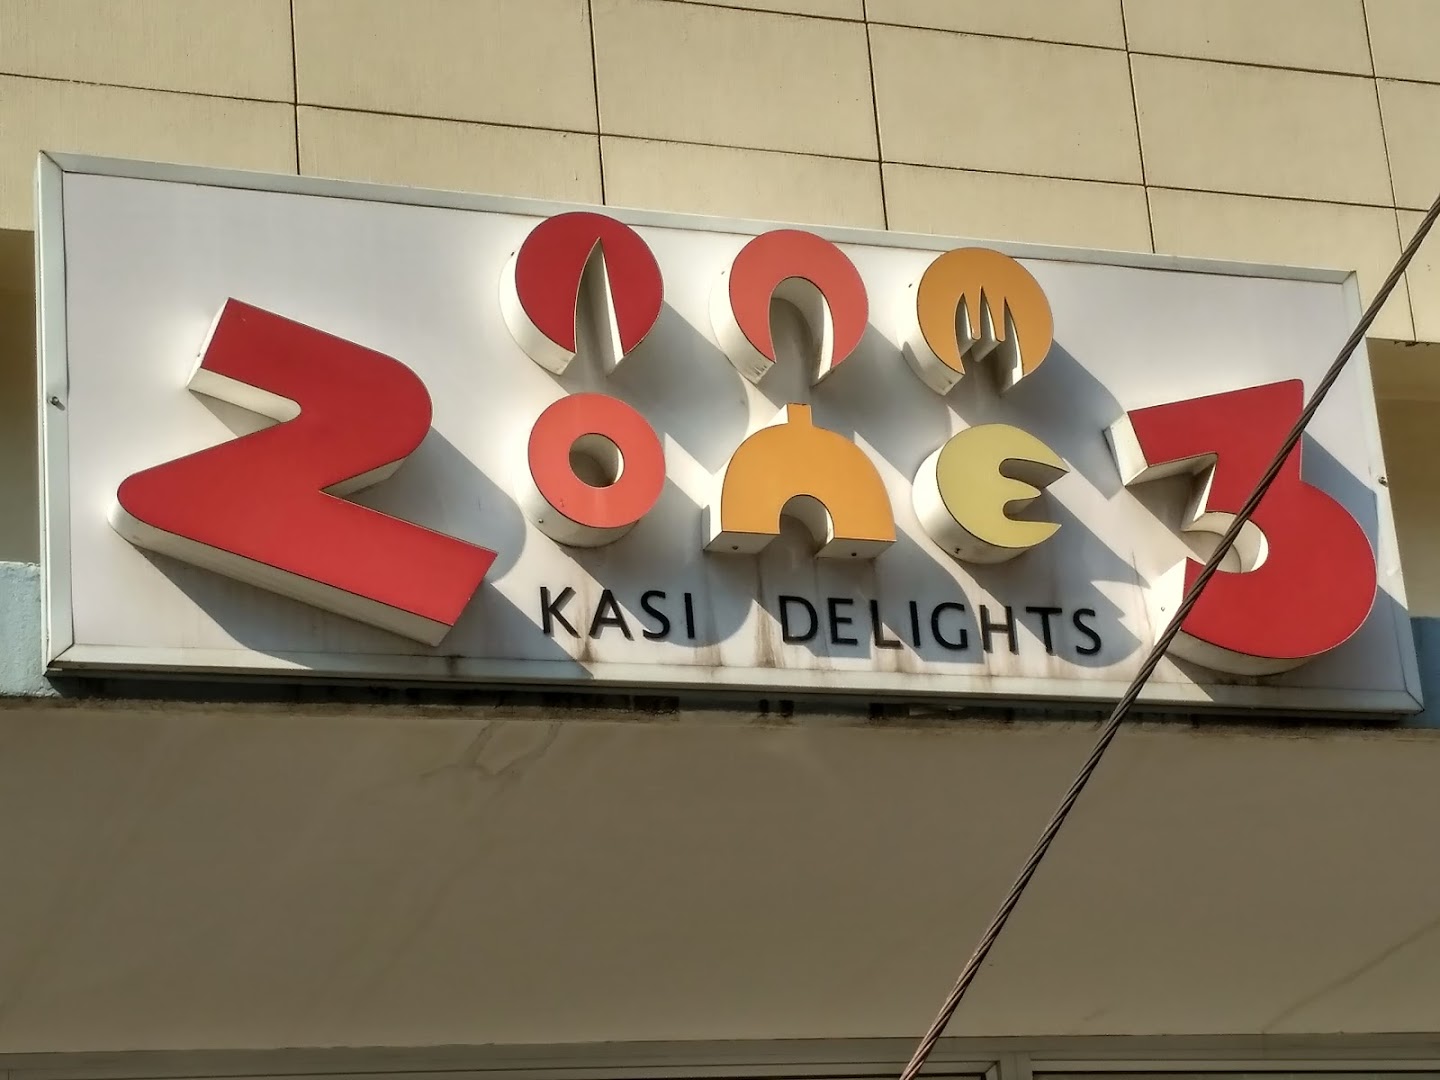 Zone 3 Kasi Delights